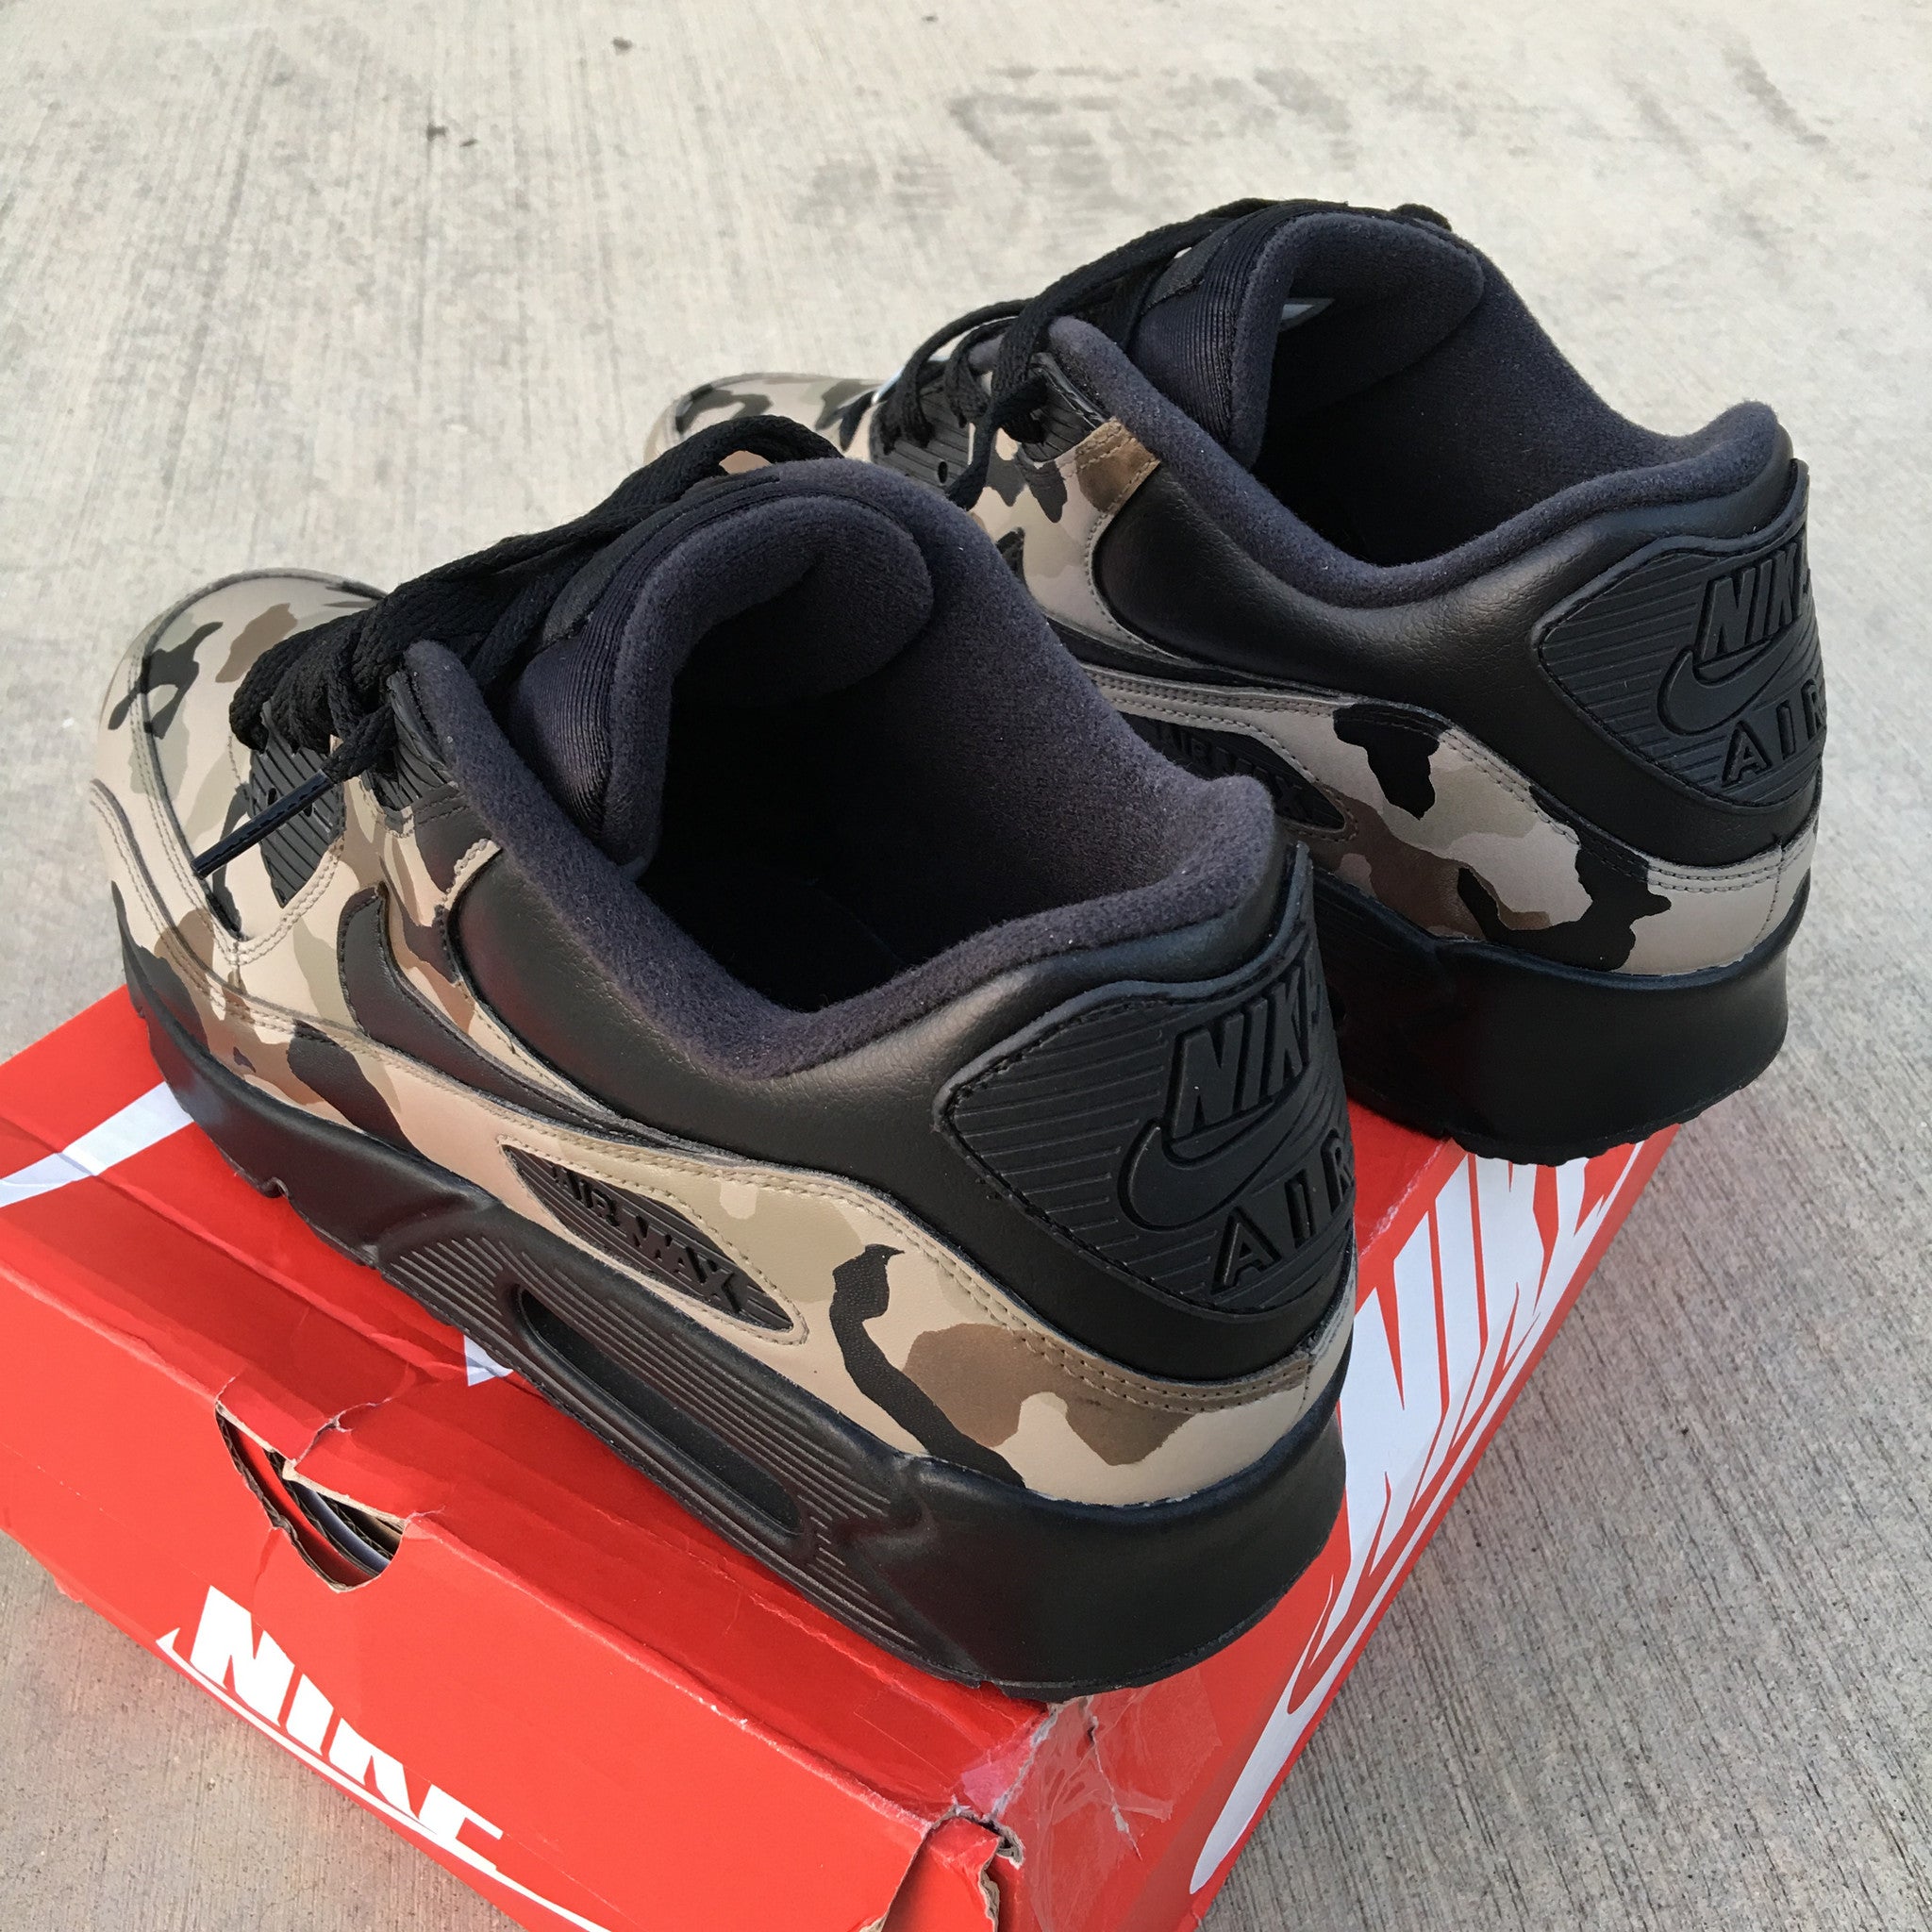 JackBoys Nike Air Max 90/1 Custom Hand Painted Shoes